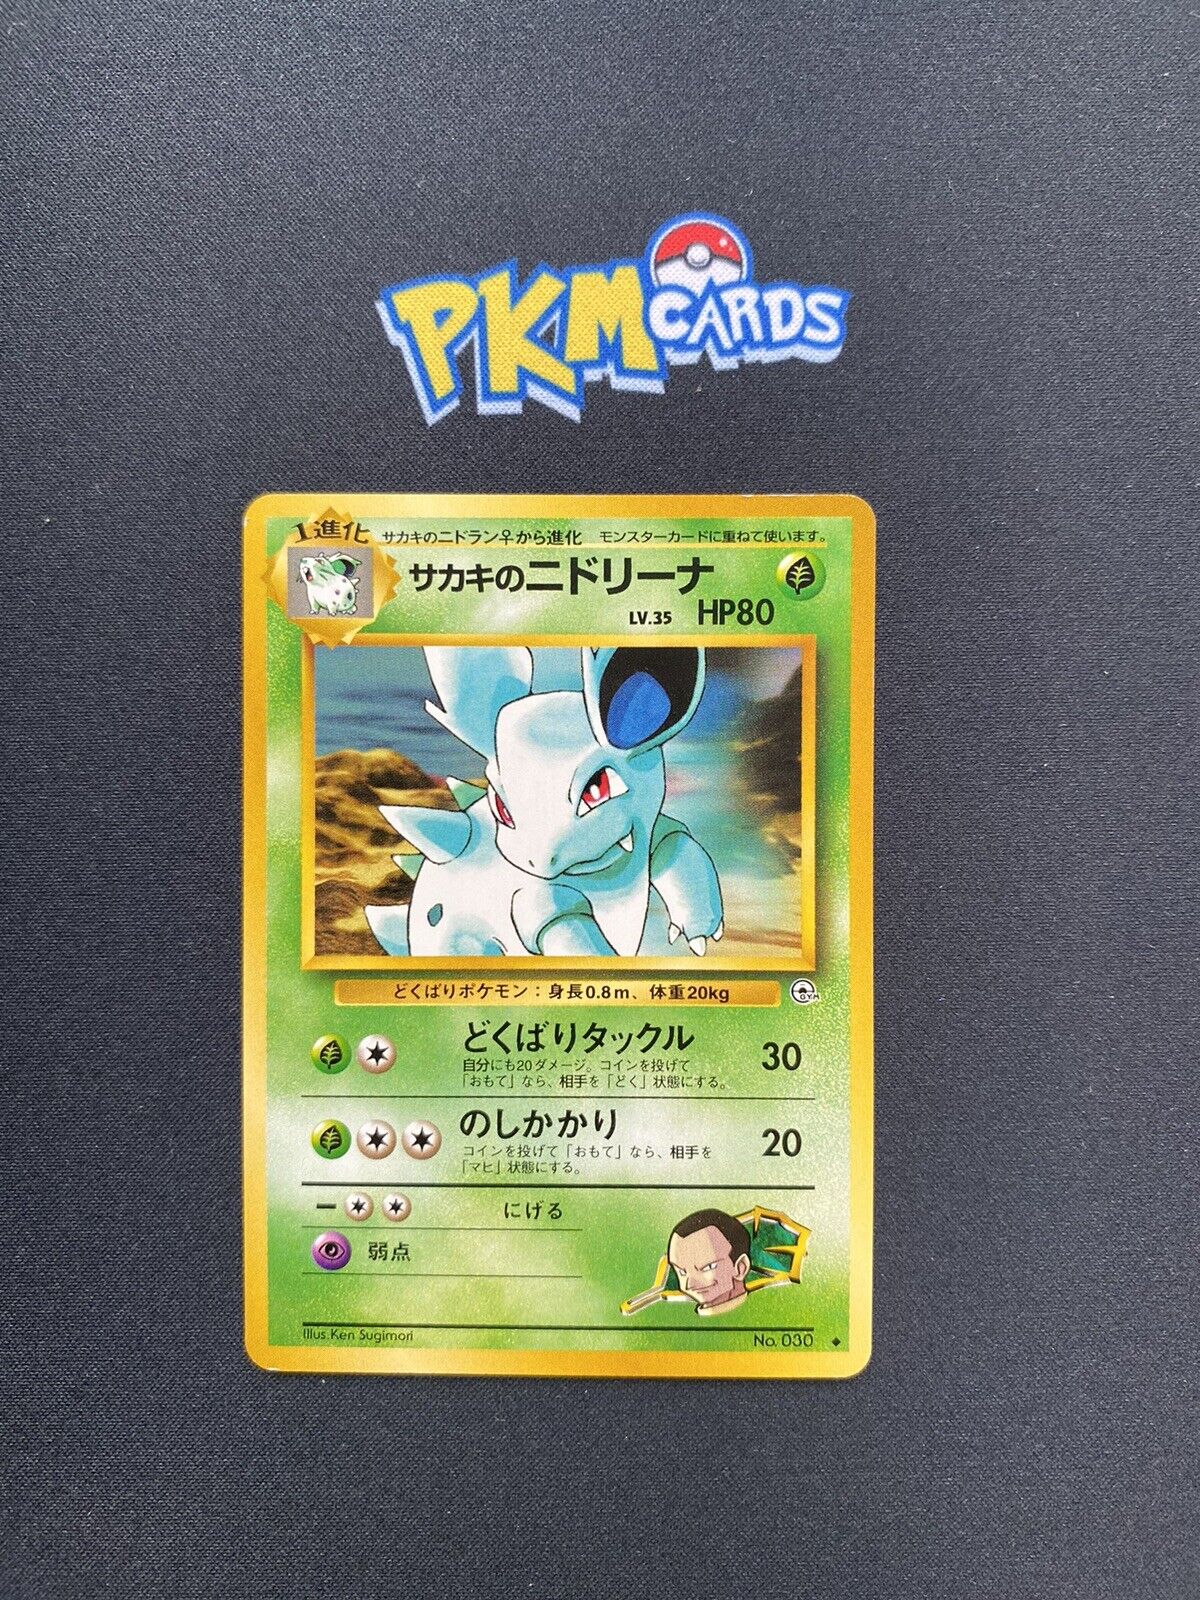 Pokémon TCG Giovanni’s Nidorina Gym No.030 Japanese Card LP.